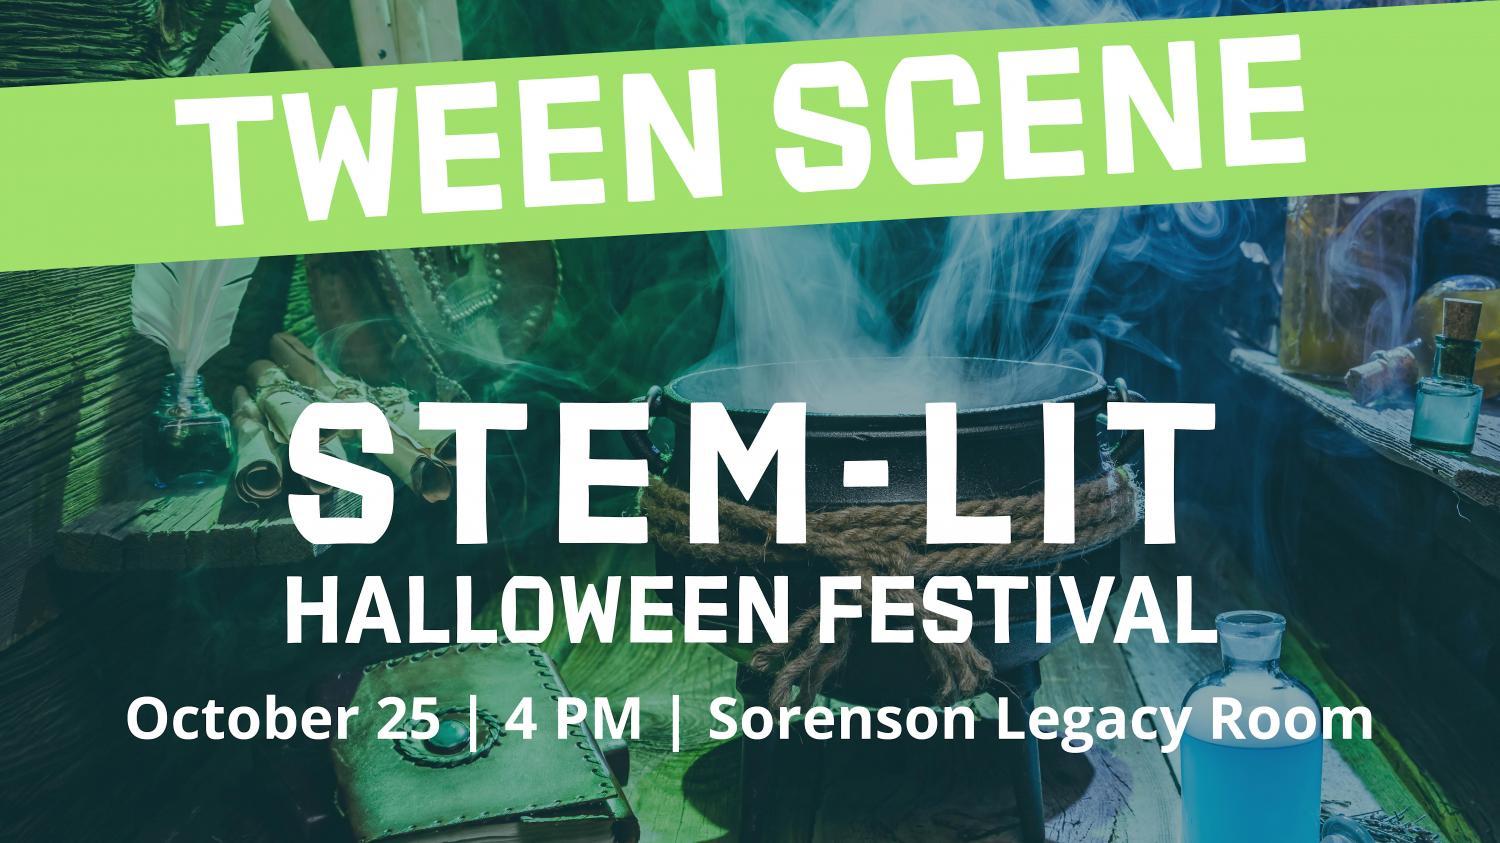 Tween Scene: STEM-Lit Halloween Festival
Tue Oct 25, 4:00 PM - Tue Oct 25, 5:00 PM
in 5 days